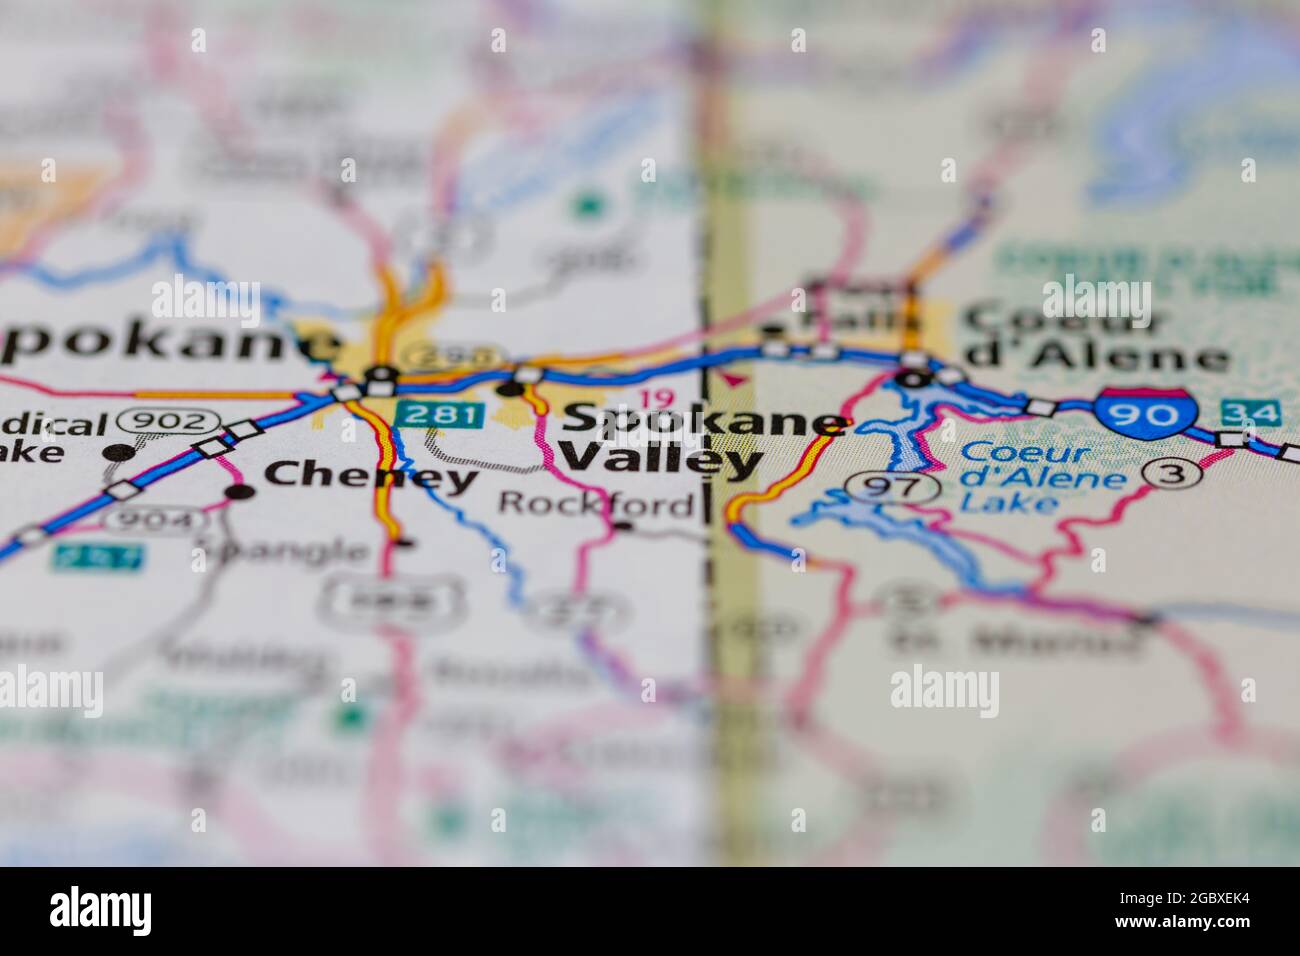 Spokane Valley Washington State Usa Shown On A Road Map Or Geography Map 2GBXEK4 